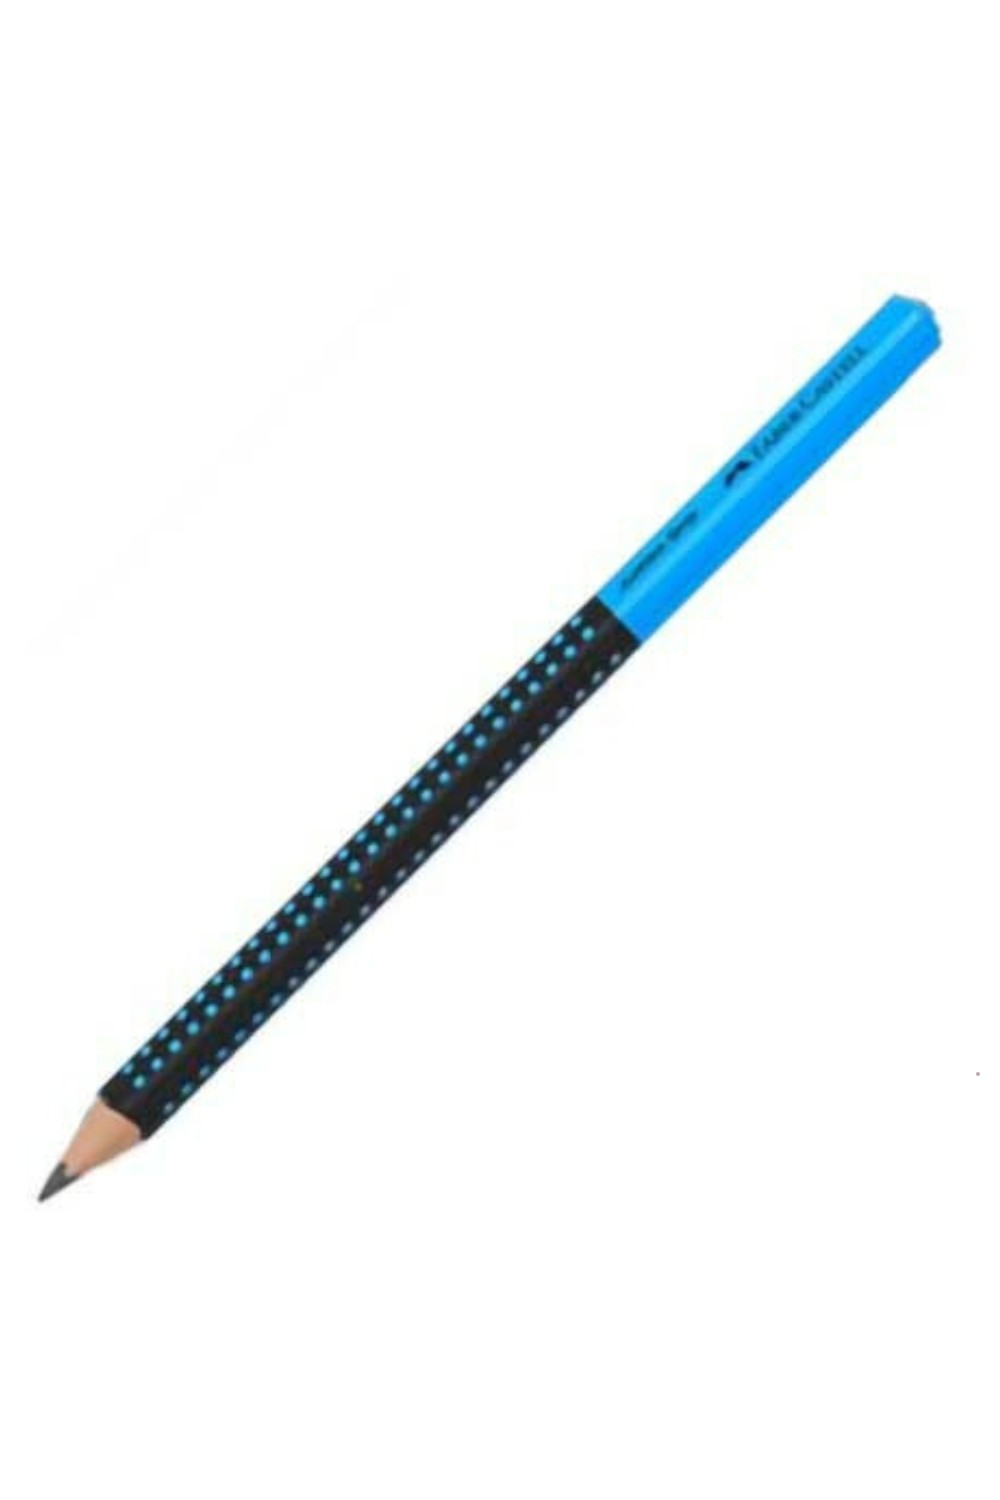 FABER CASTELL grafitna olovka CRNO-PLAVA 